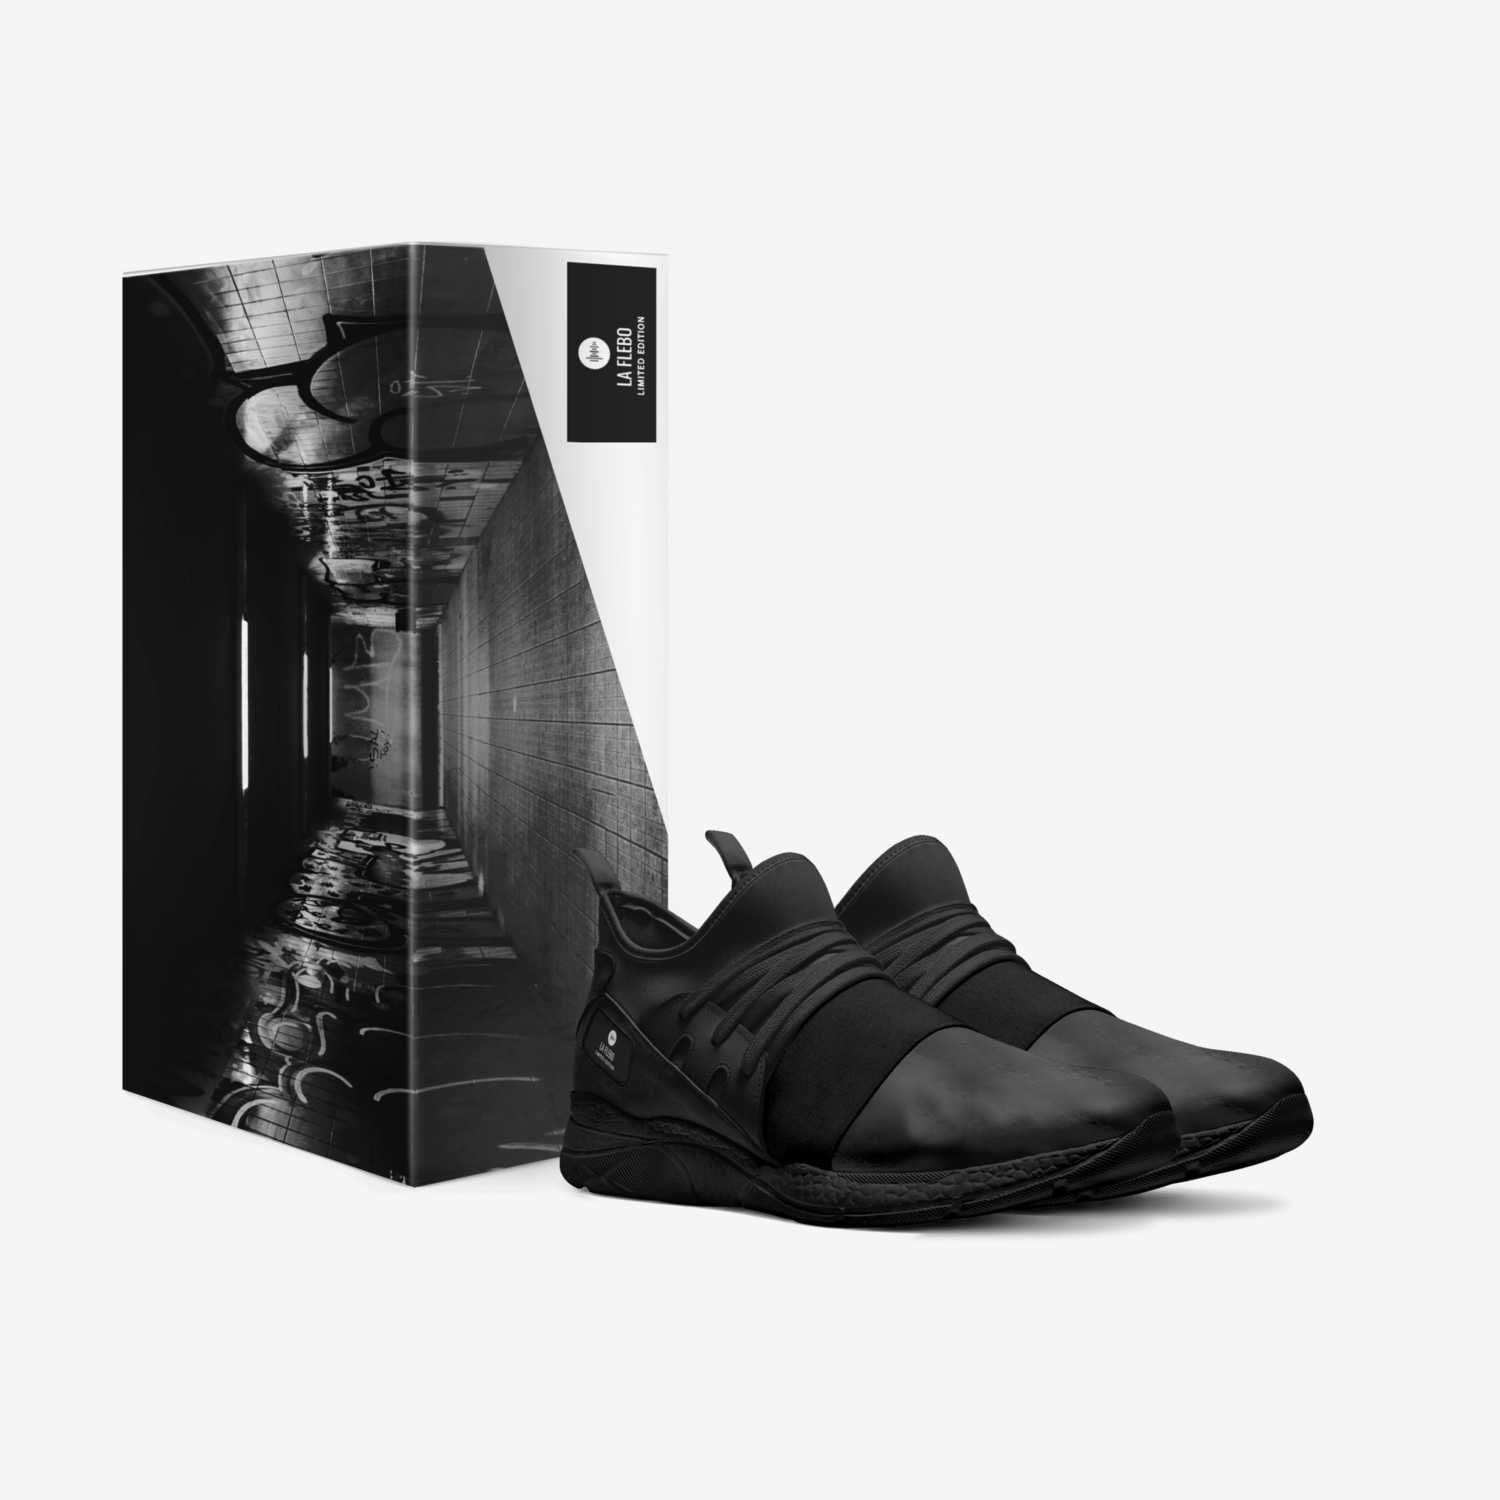 La Flebo  custom made in Italy shoes by Brian Washington | Box view